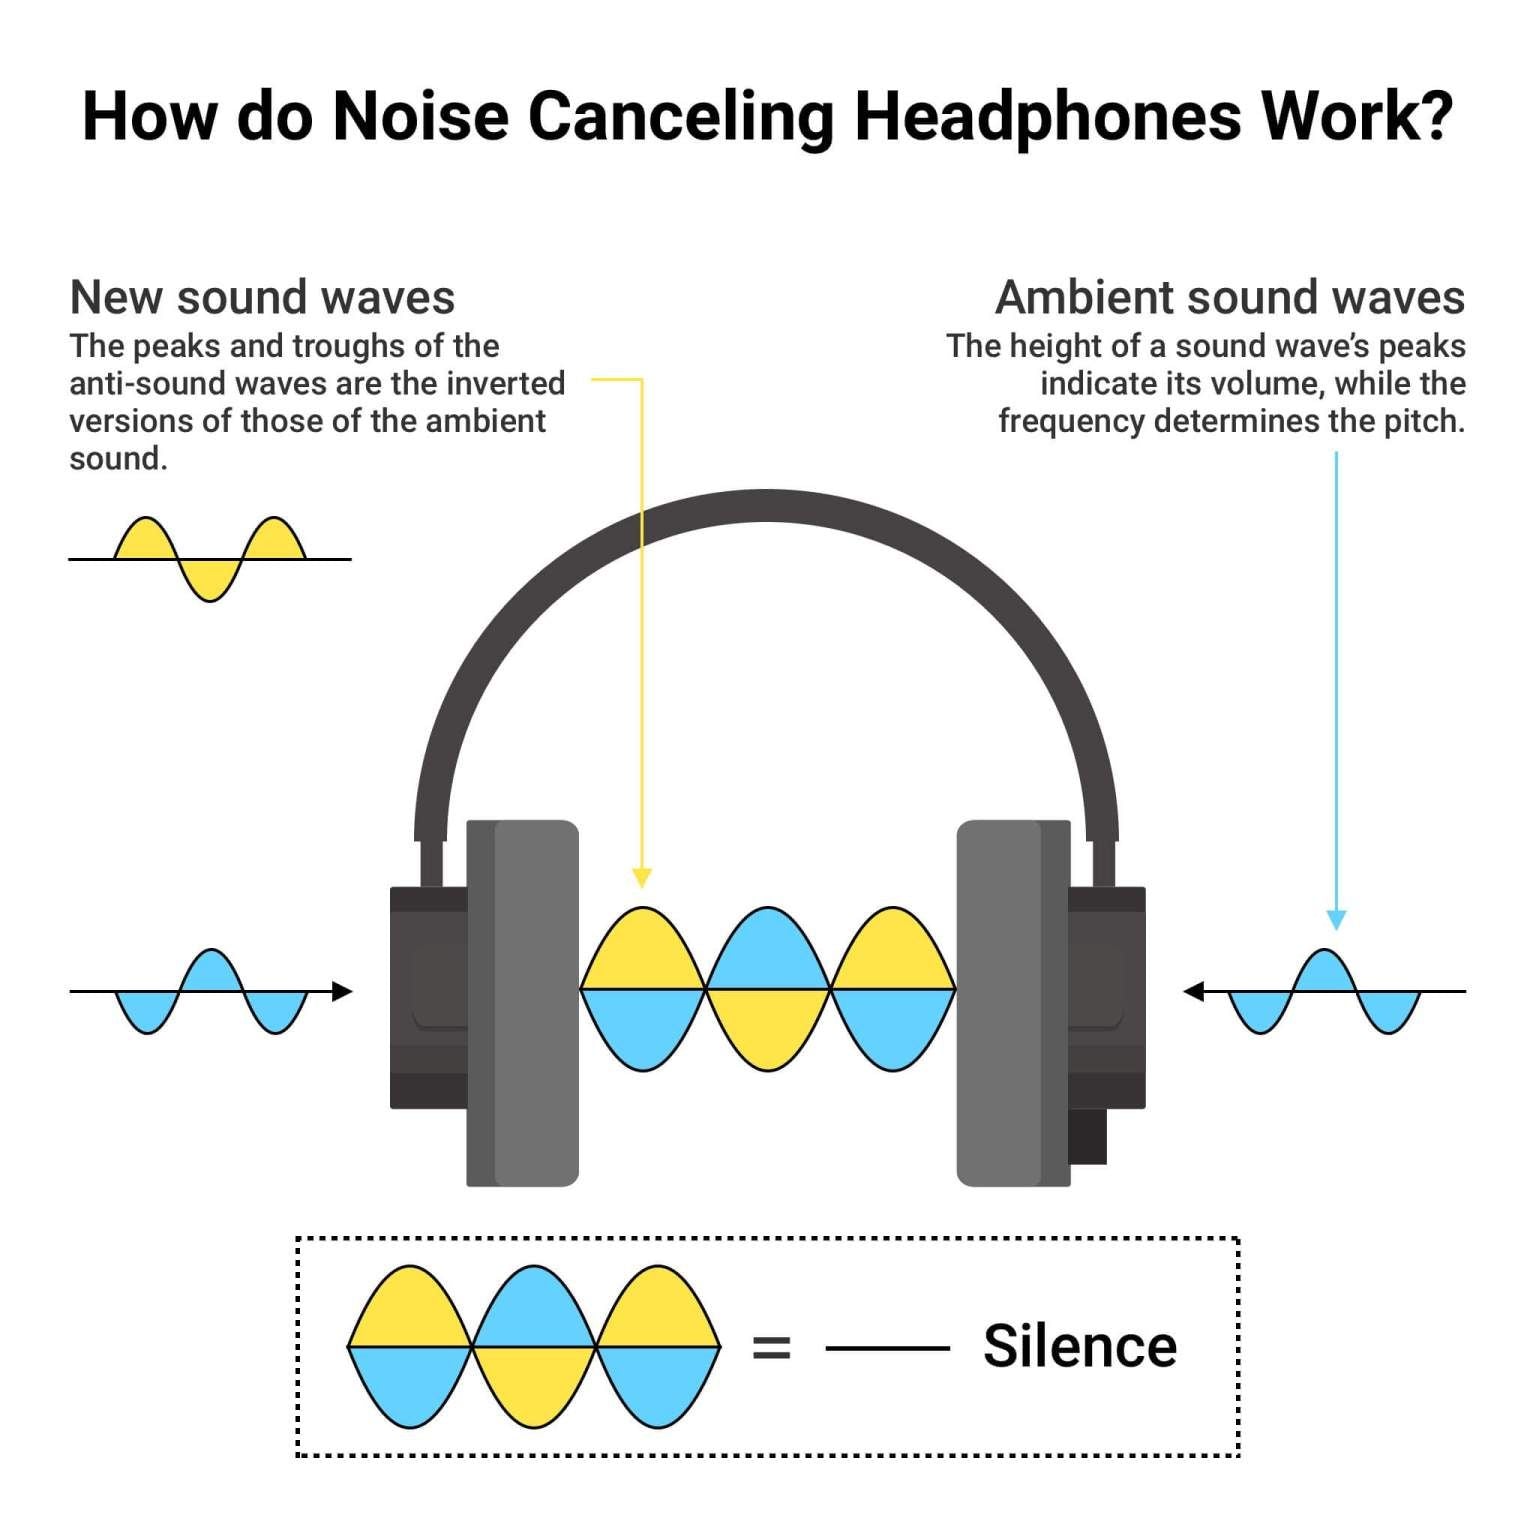 How do noise cancellation headphones work?